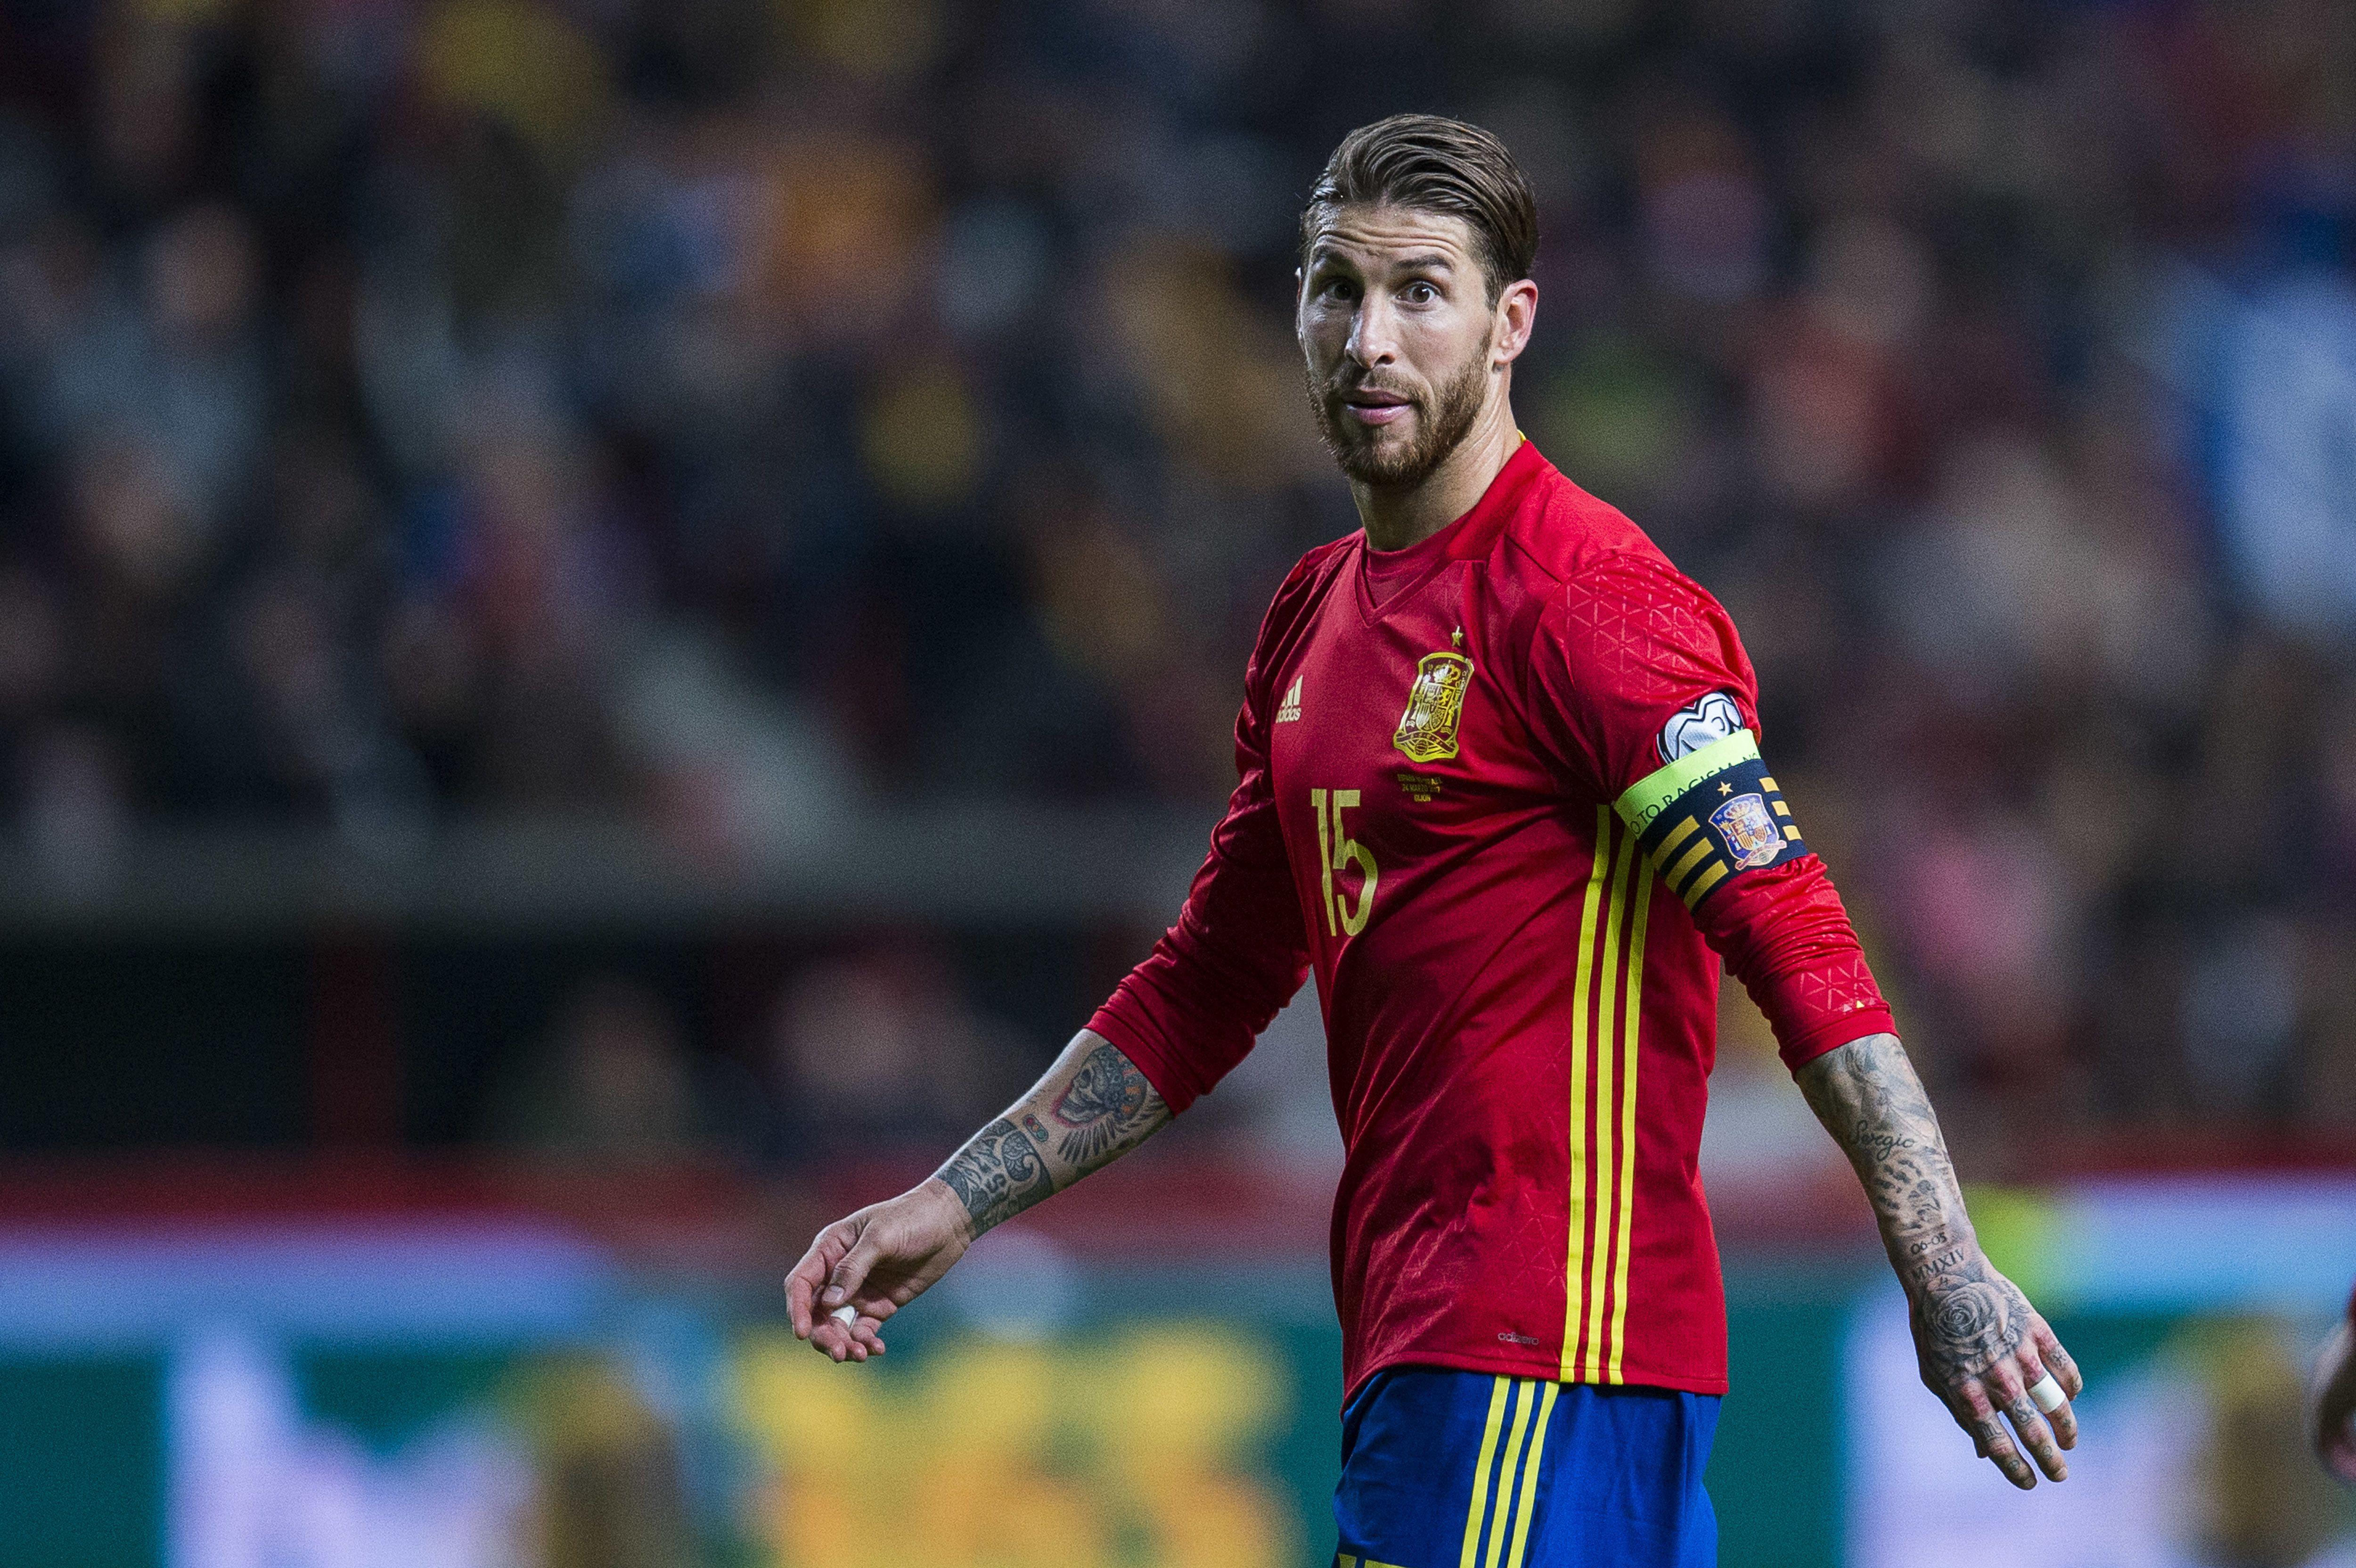 Sergio Ramos Spain Football Player in FIFA World Cup 2018 4K